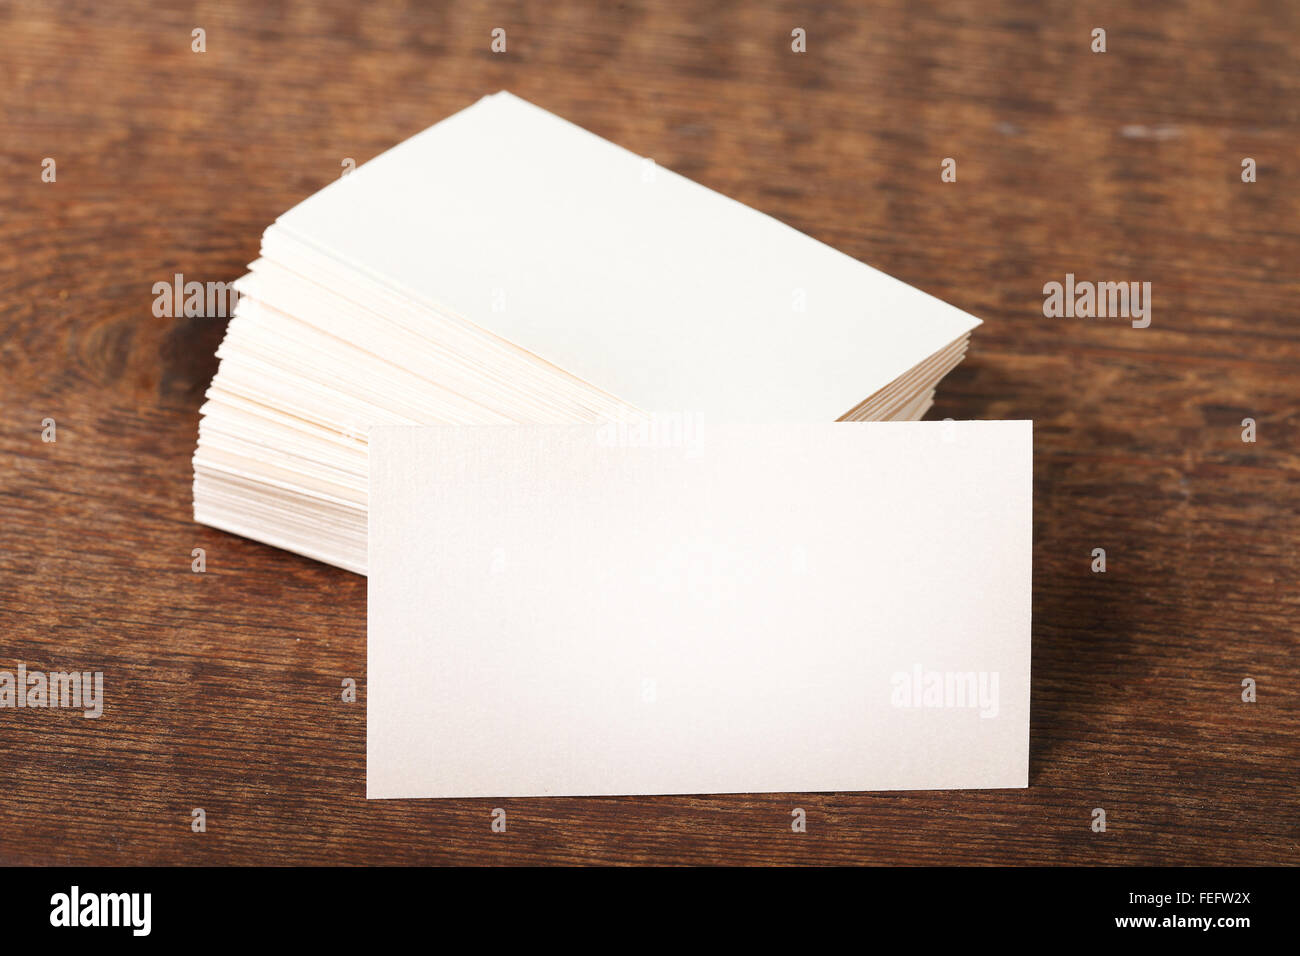 Bianca spessa carta cotone business card mock up su vintage ponte di legno  Foto stock - Alamy